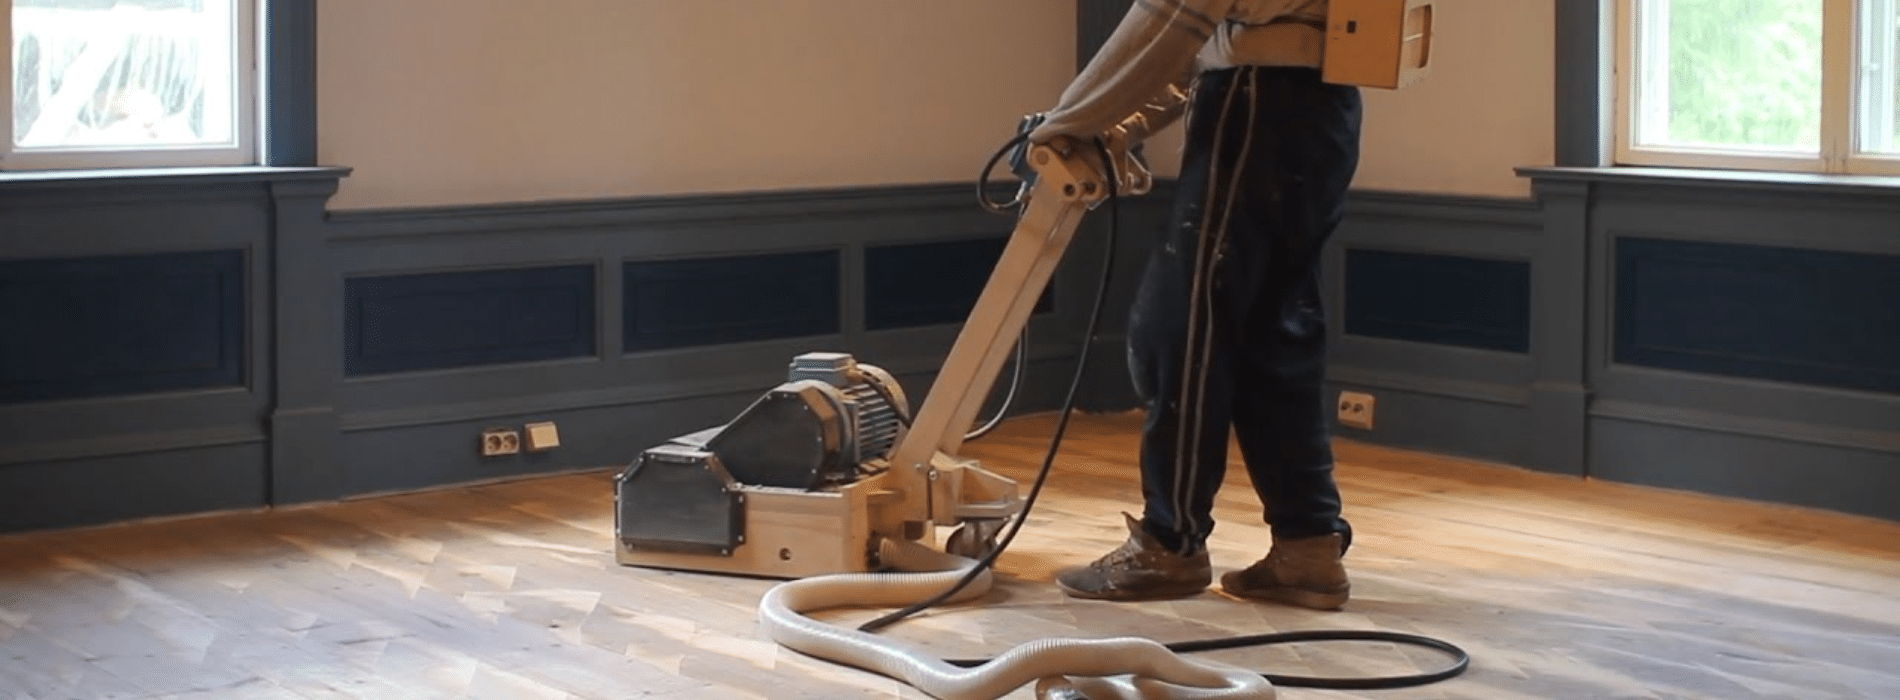 Wood Floor Sanding Preparation